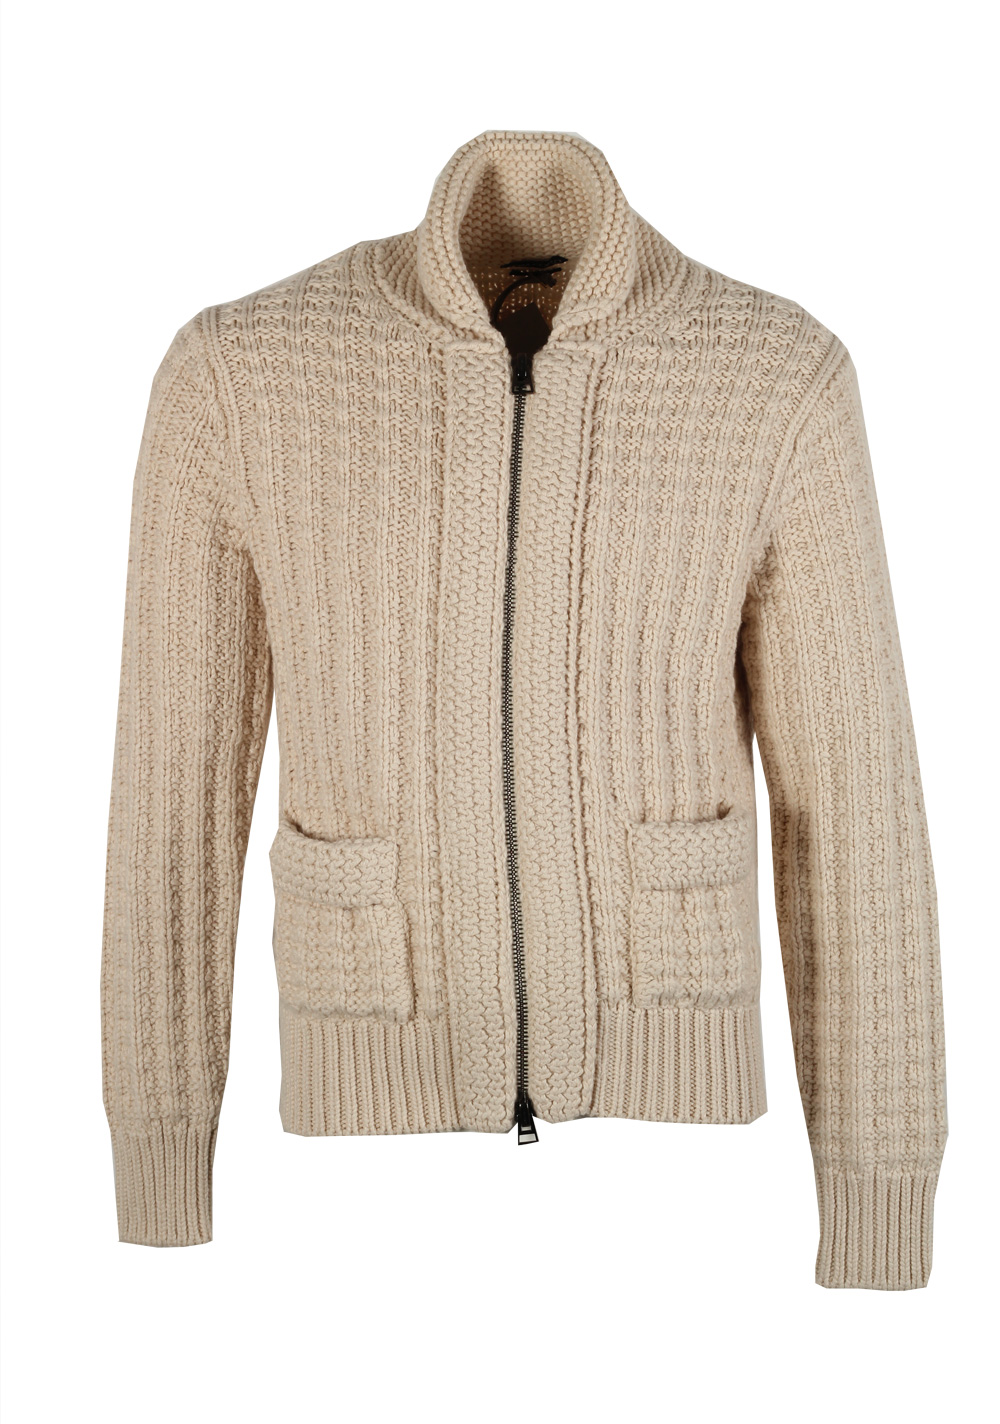 TOM FORD Beige Zipper Cardigan Size Medium / 40R U.S. Cotton Cashmere | Costume Limité